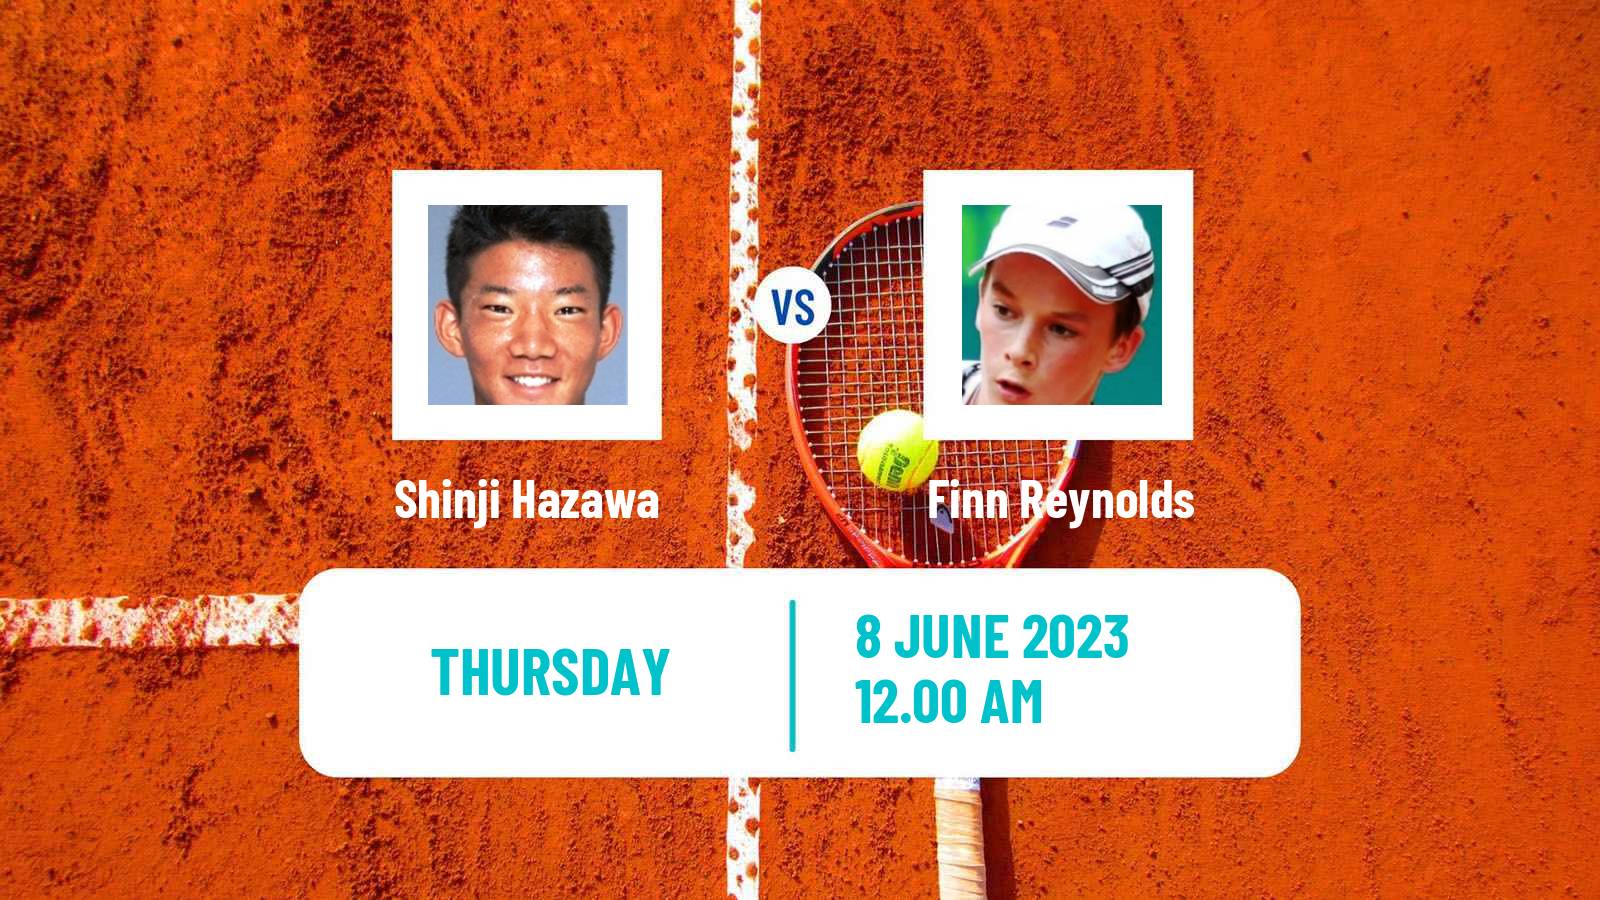 Tennis ITF M15 Nakhon Si Thammarat 2 Men Shinji Hazawa - Finn Reynolds